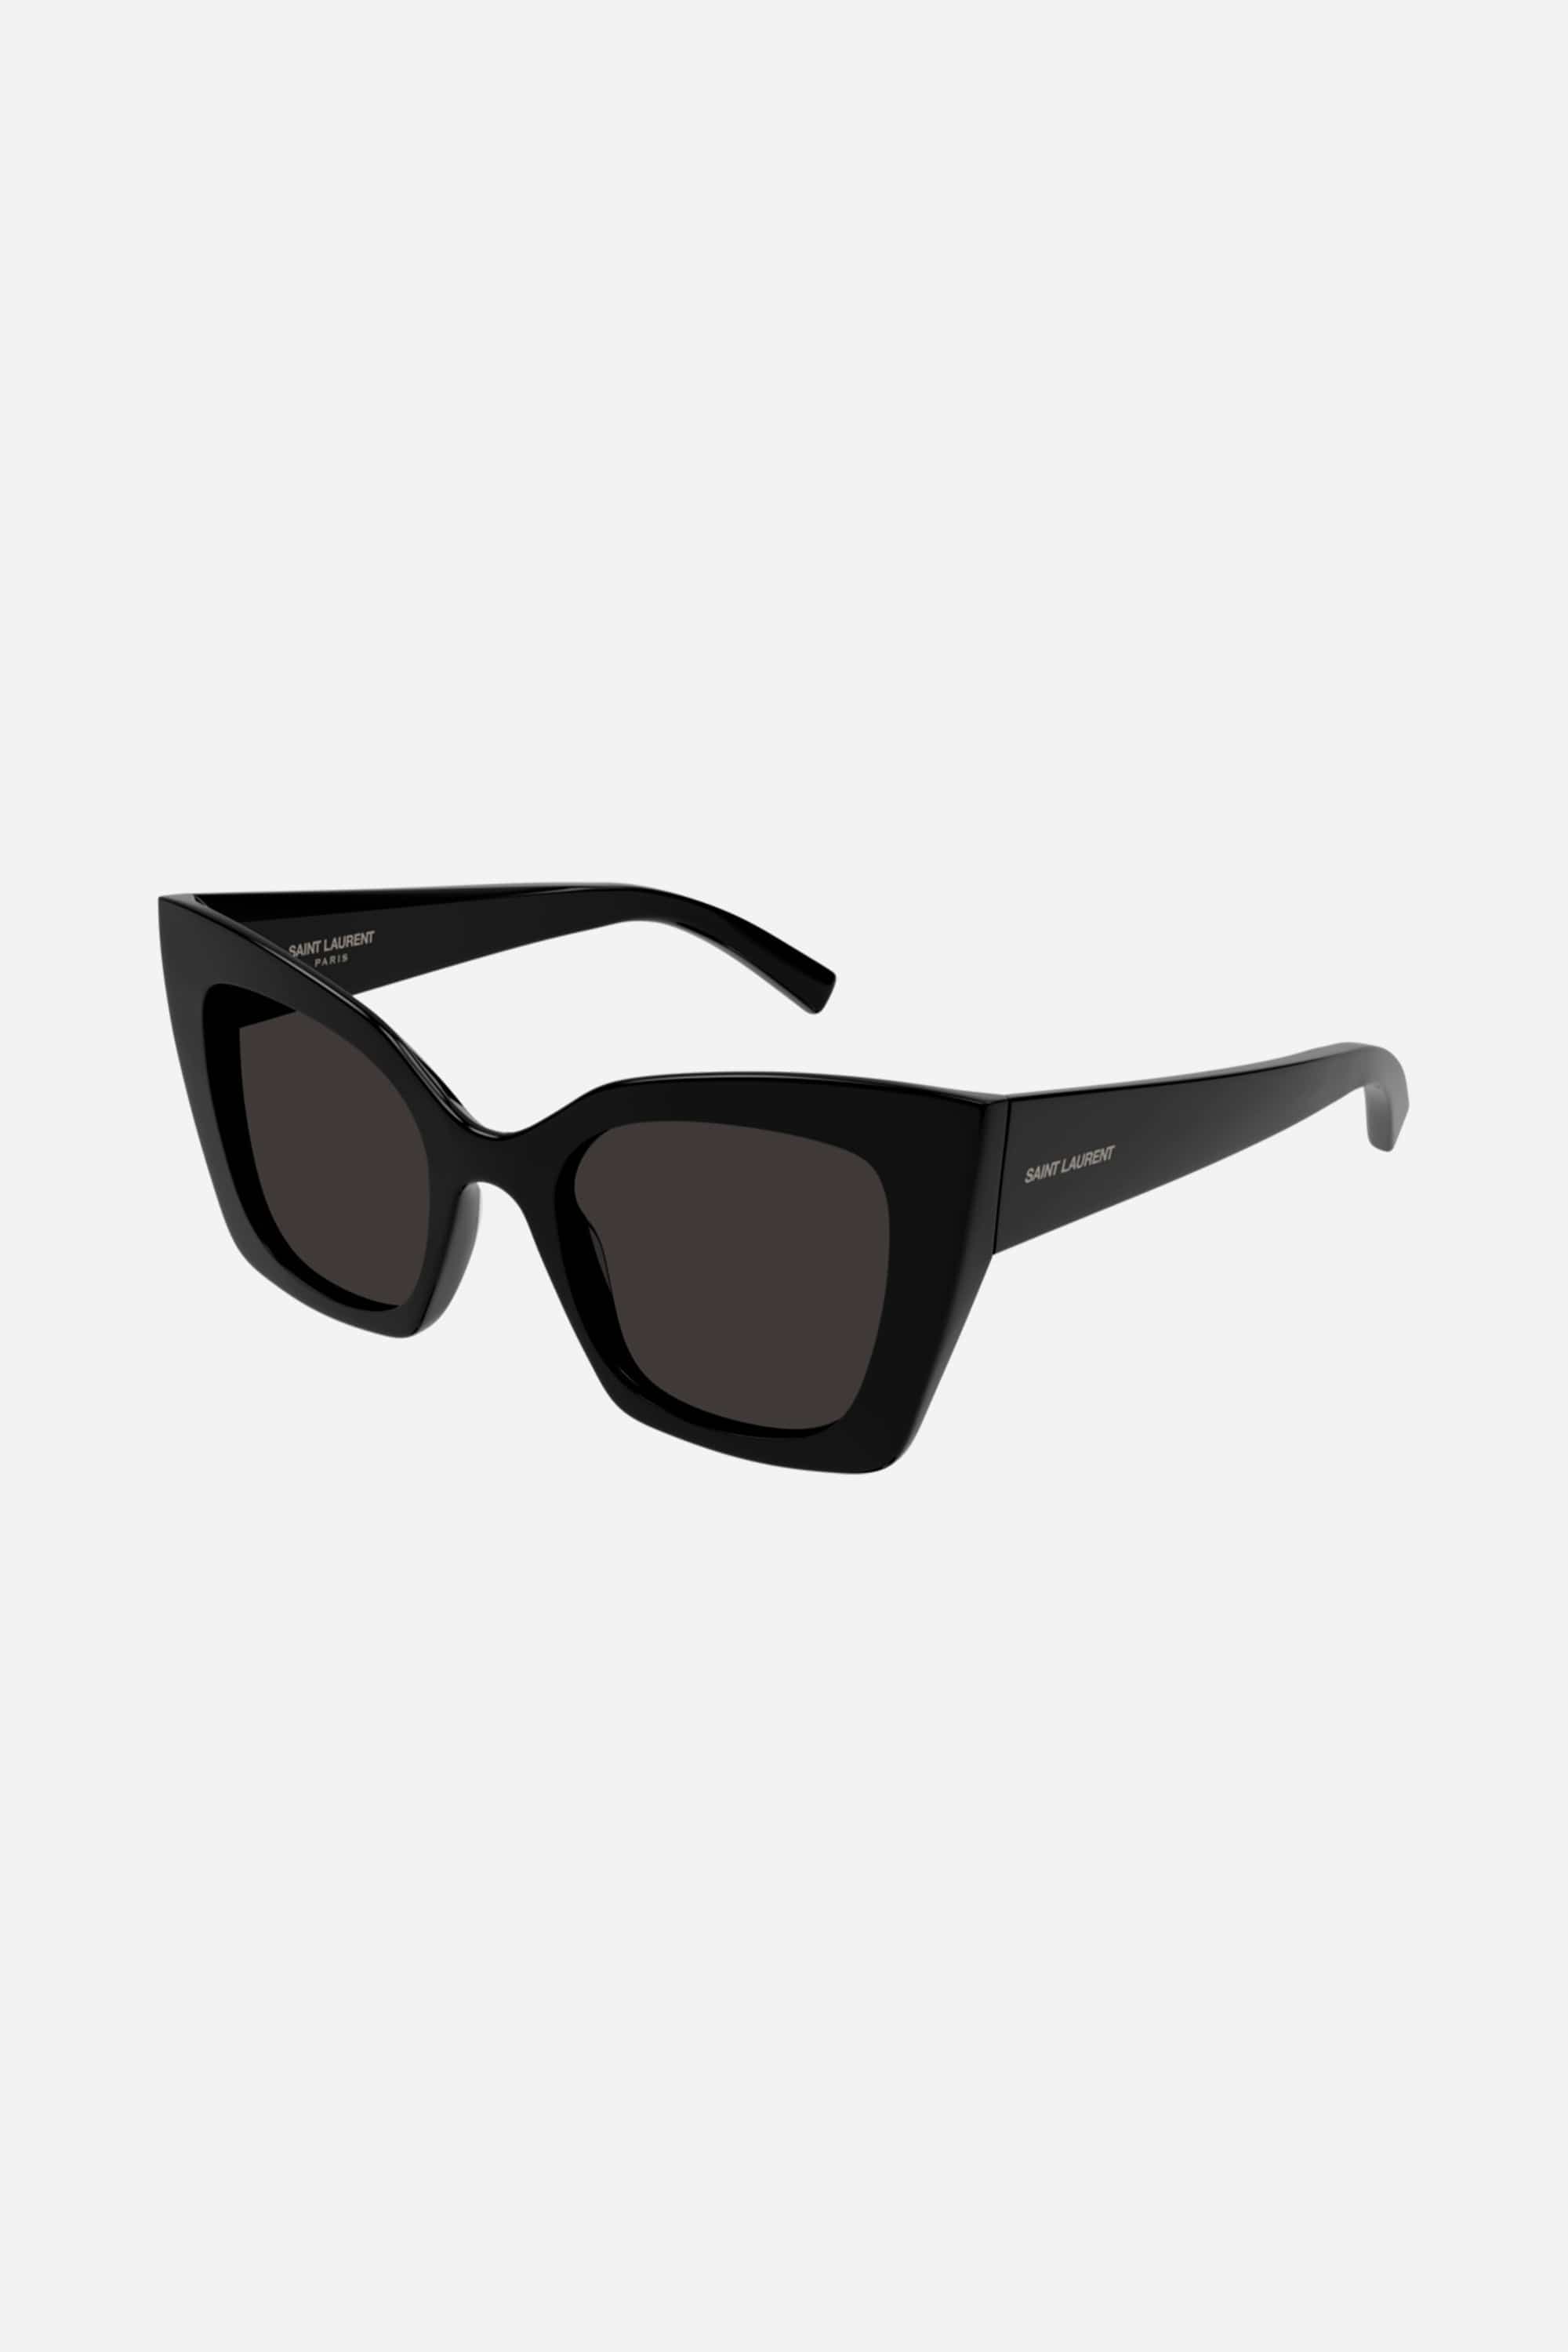 Saint Laurent cat eye bold black sunglasses - Eyewear Club